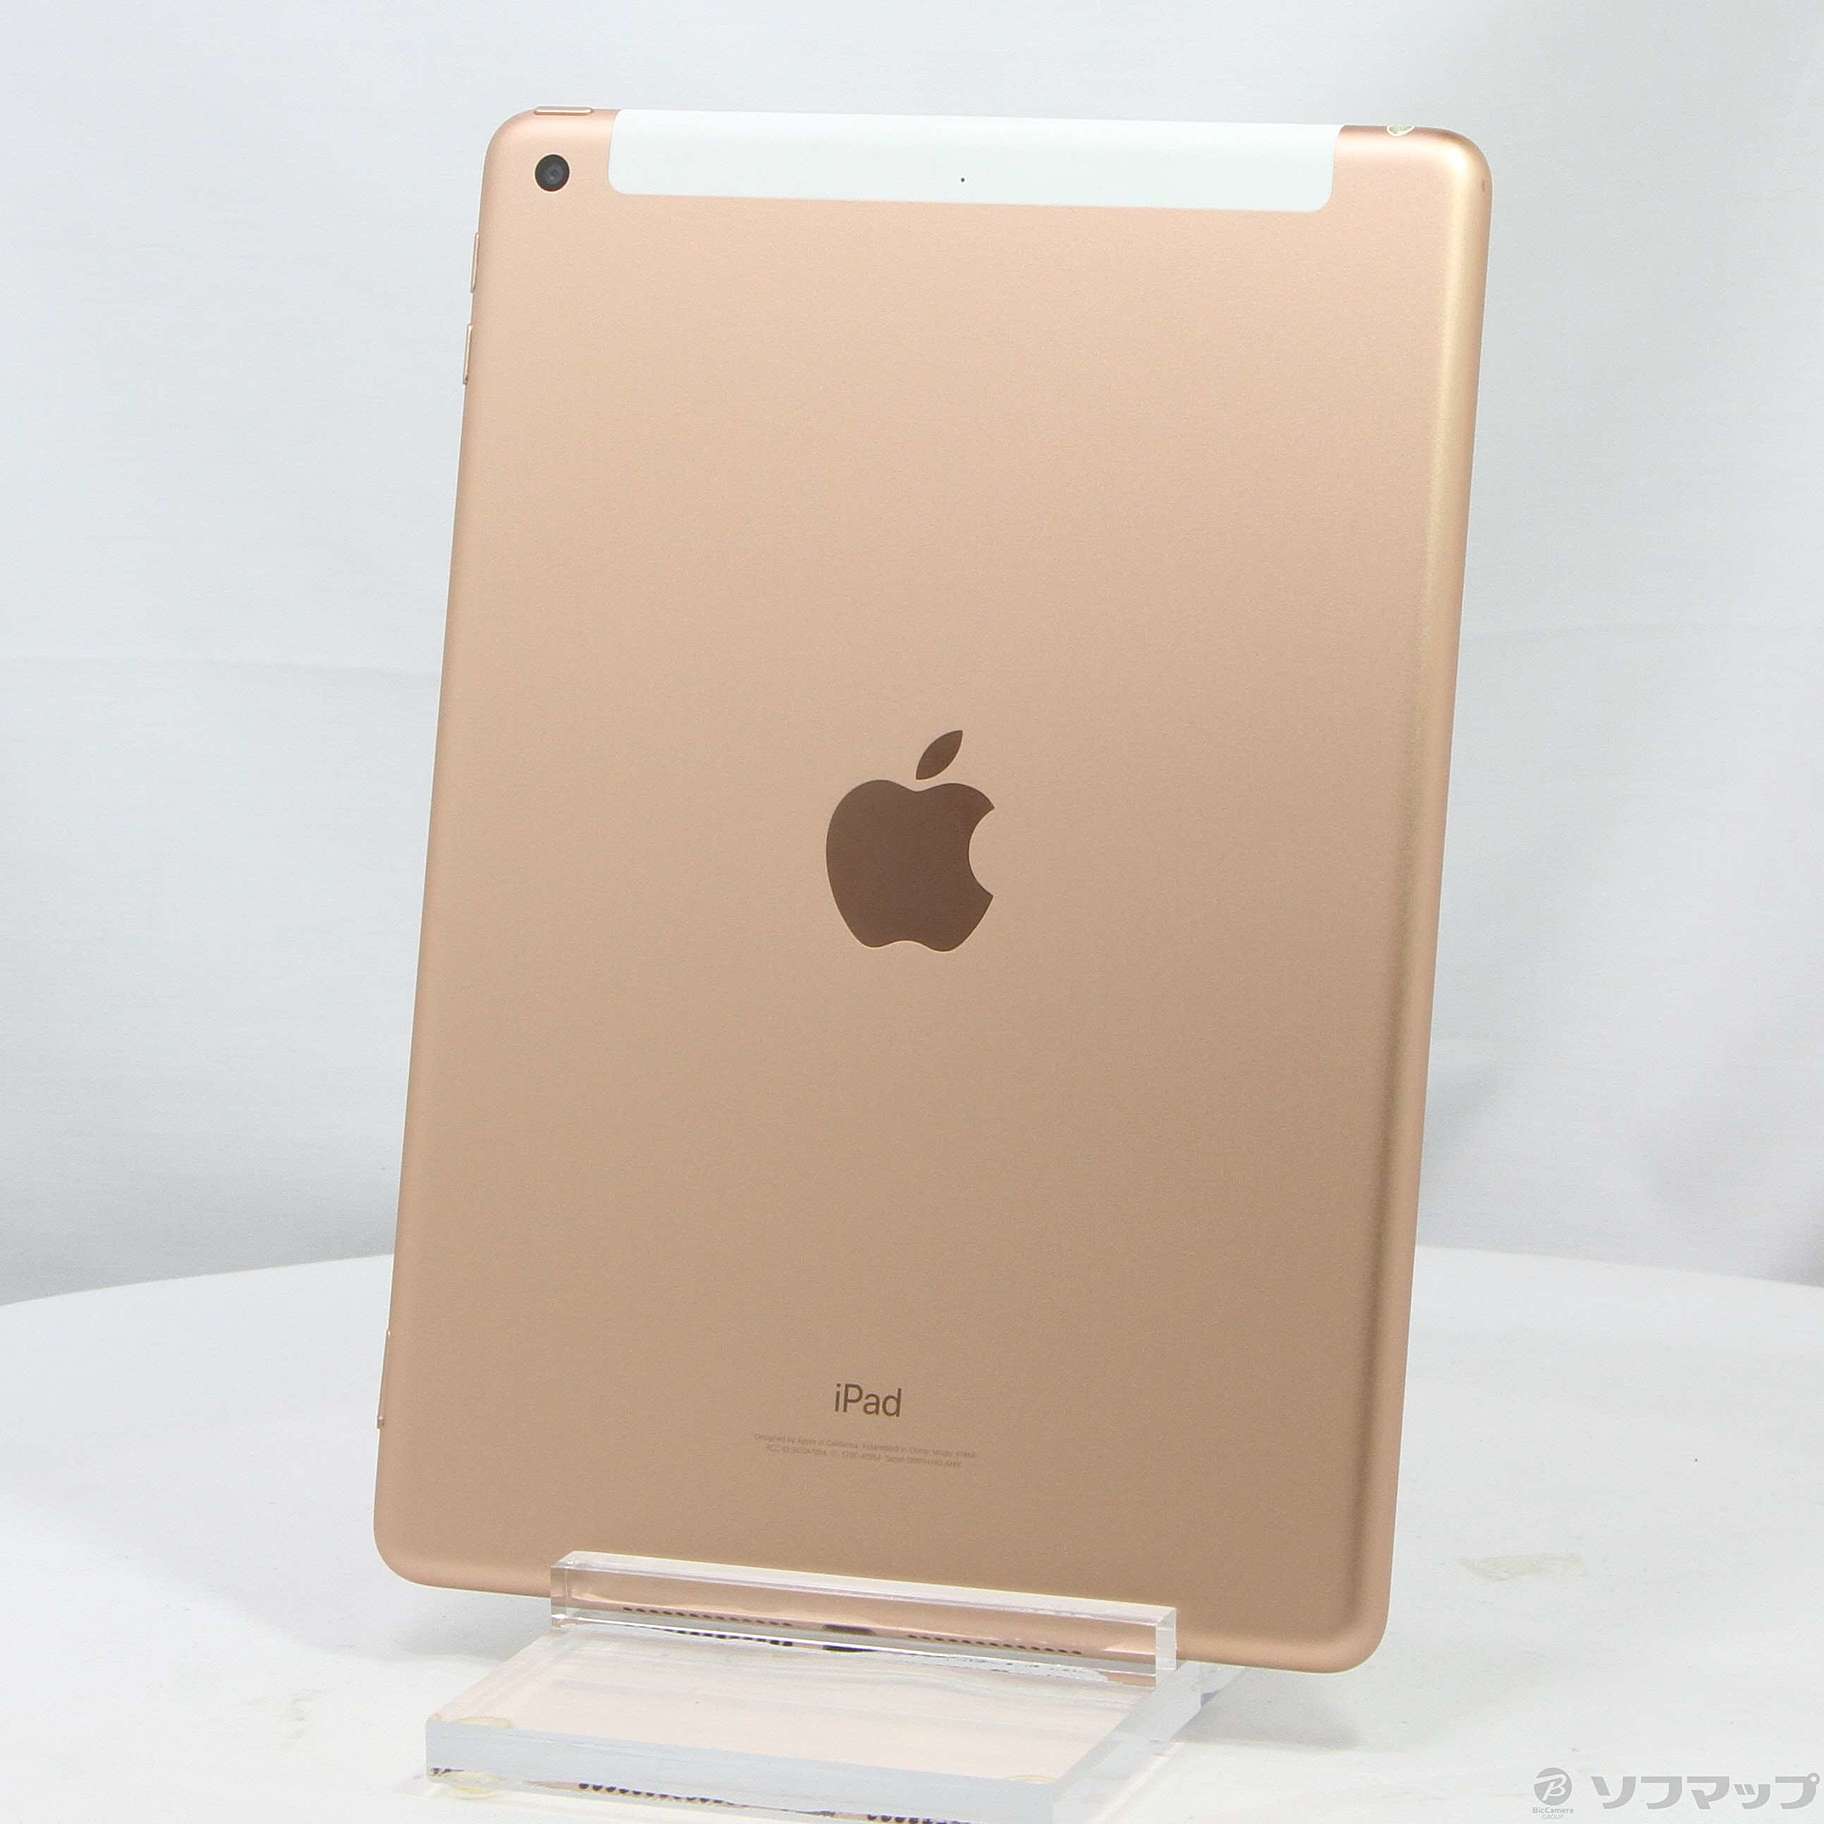 APPLE iPad IPAD WI-FI 128GB 2018 ゴールド